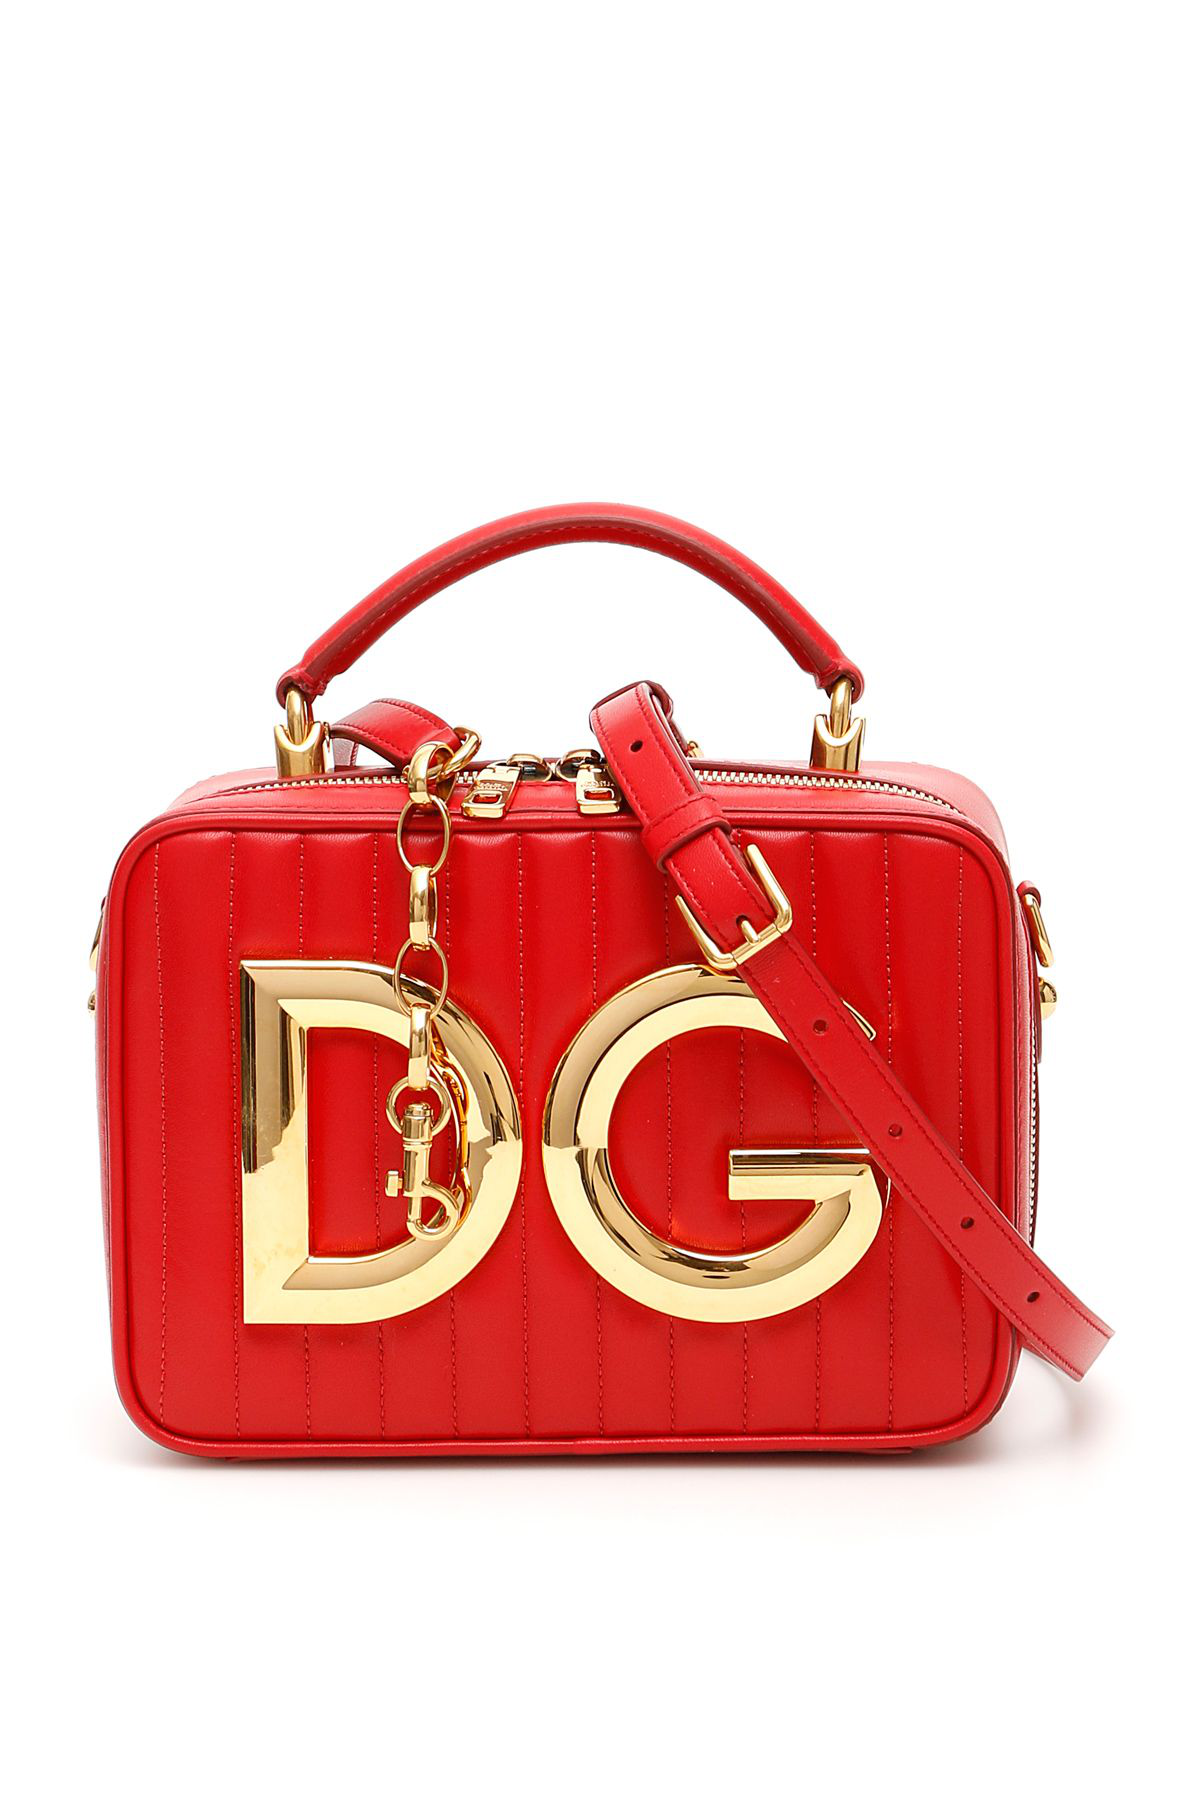 Dolce & Gabbana Quilted Dg Girls Bag In Rubino | ModeSens